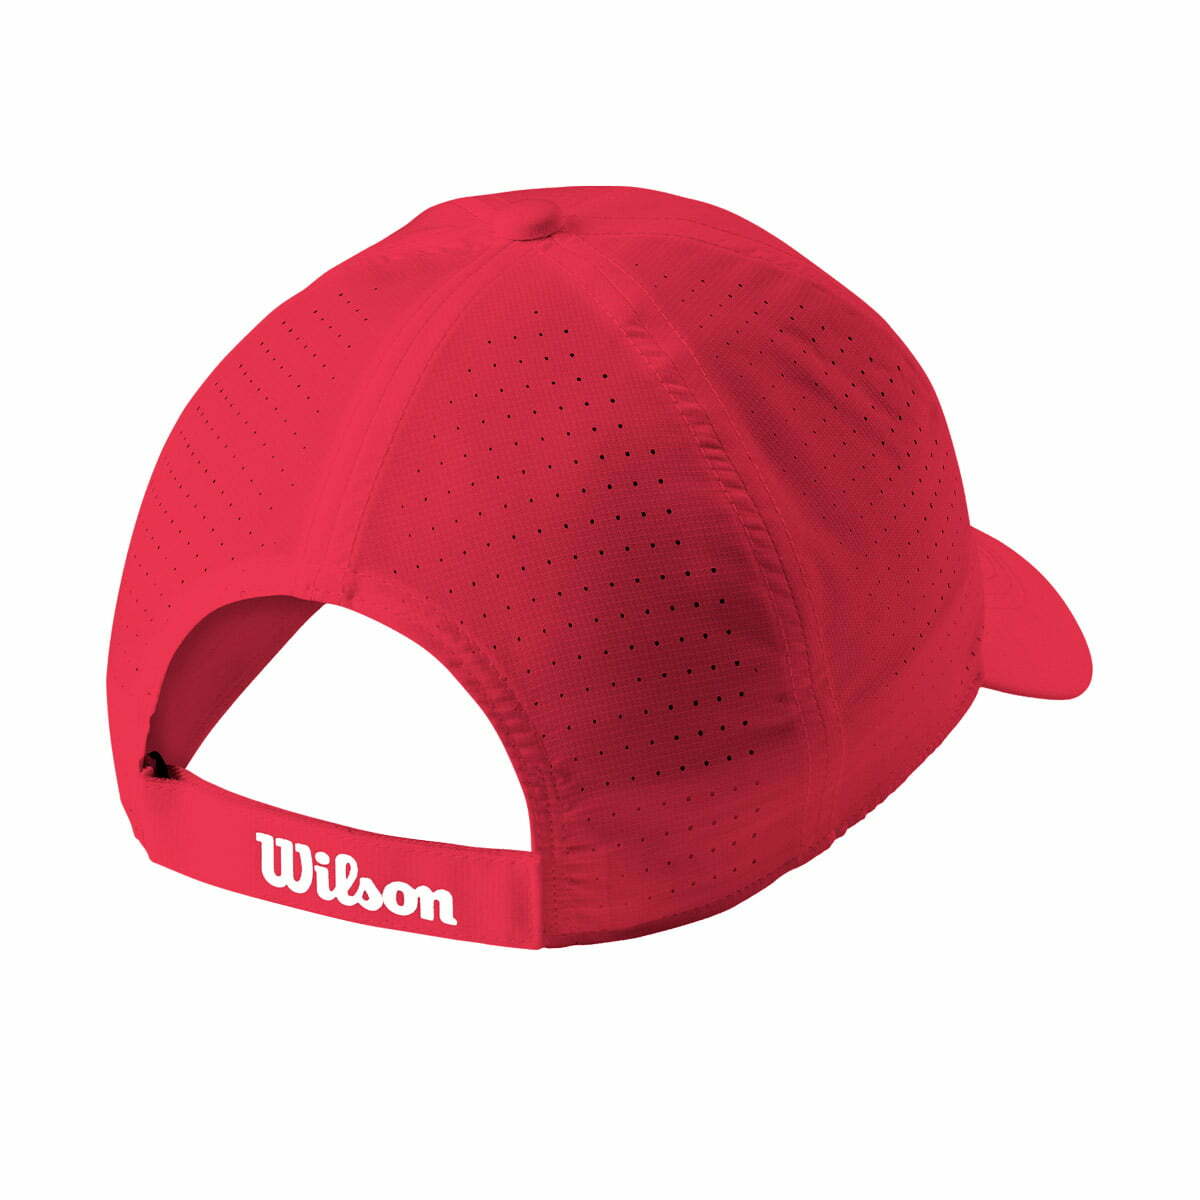 Wra777105 1 Ss19 Accessories Ultralight Tennis Cap U Red White Back1.jpg